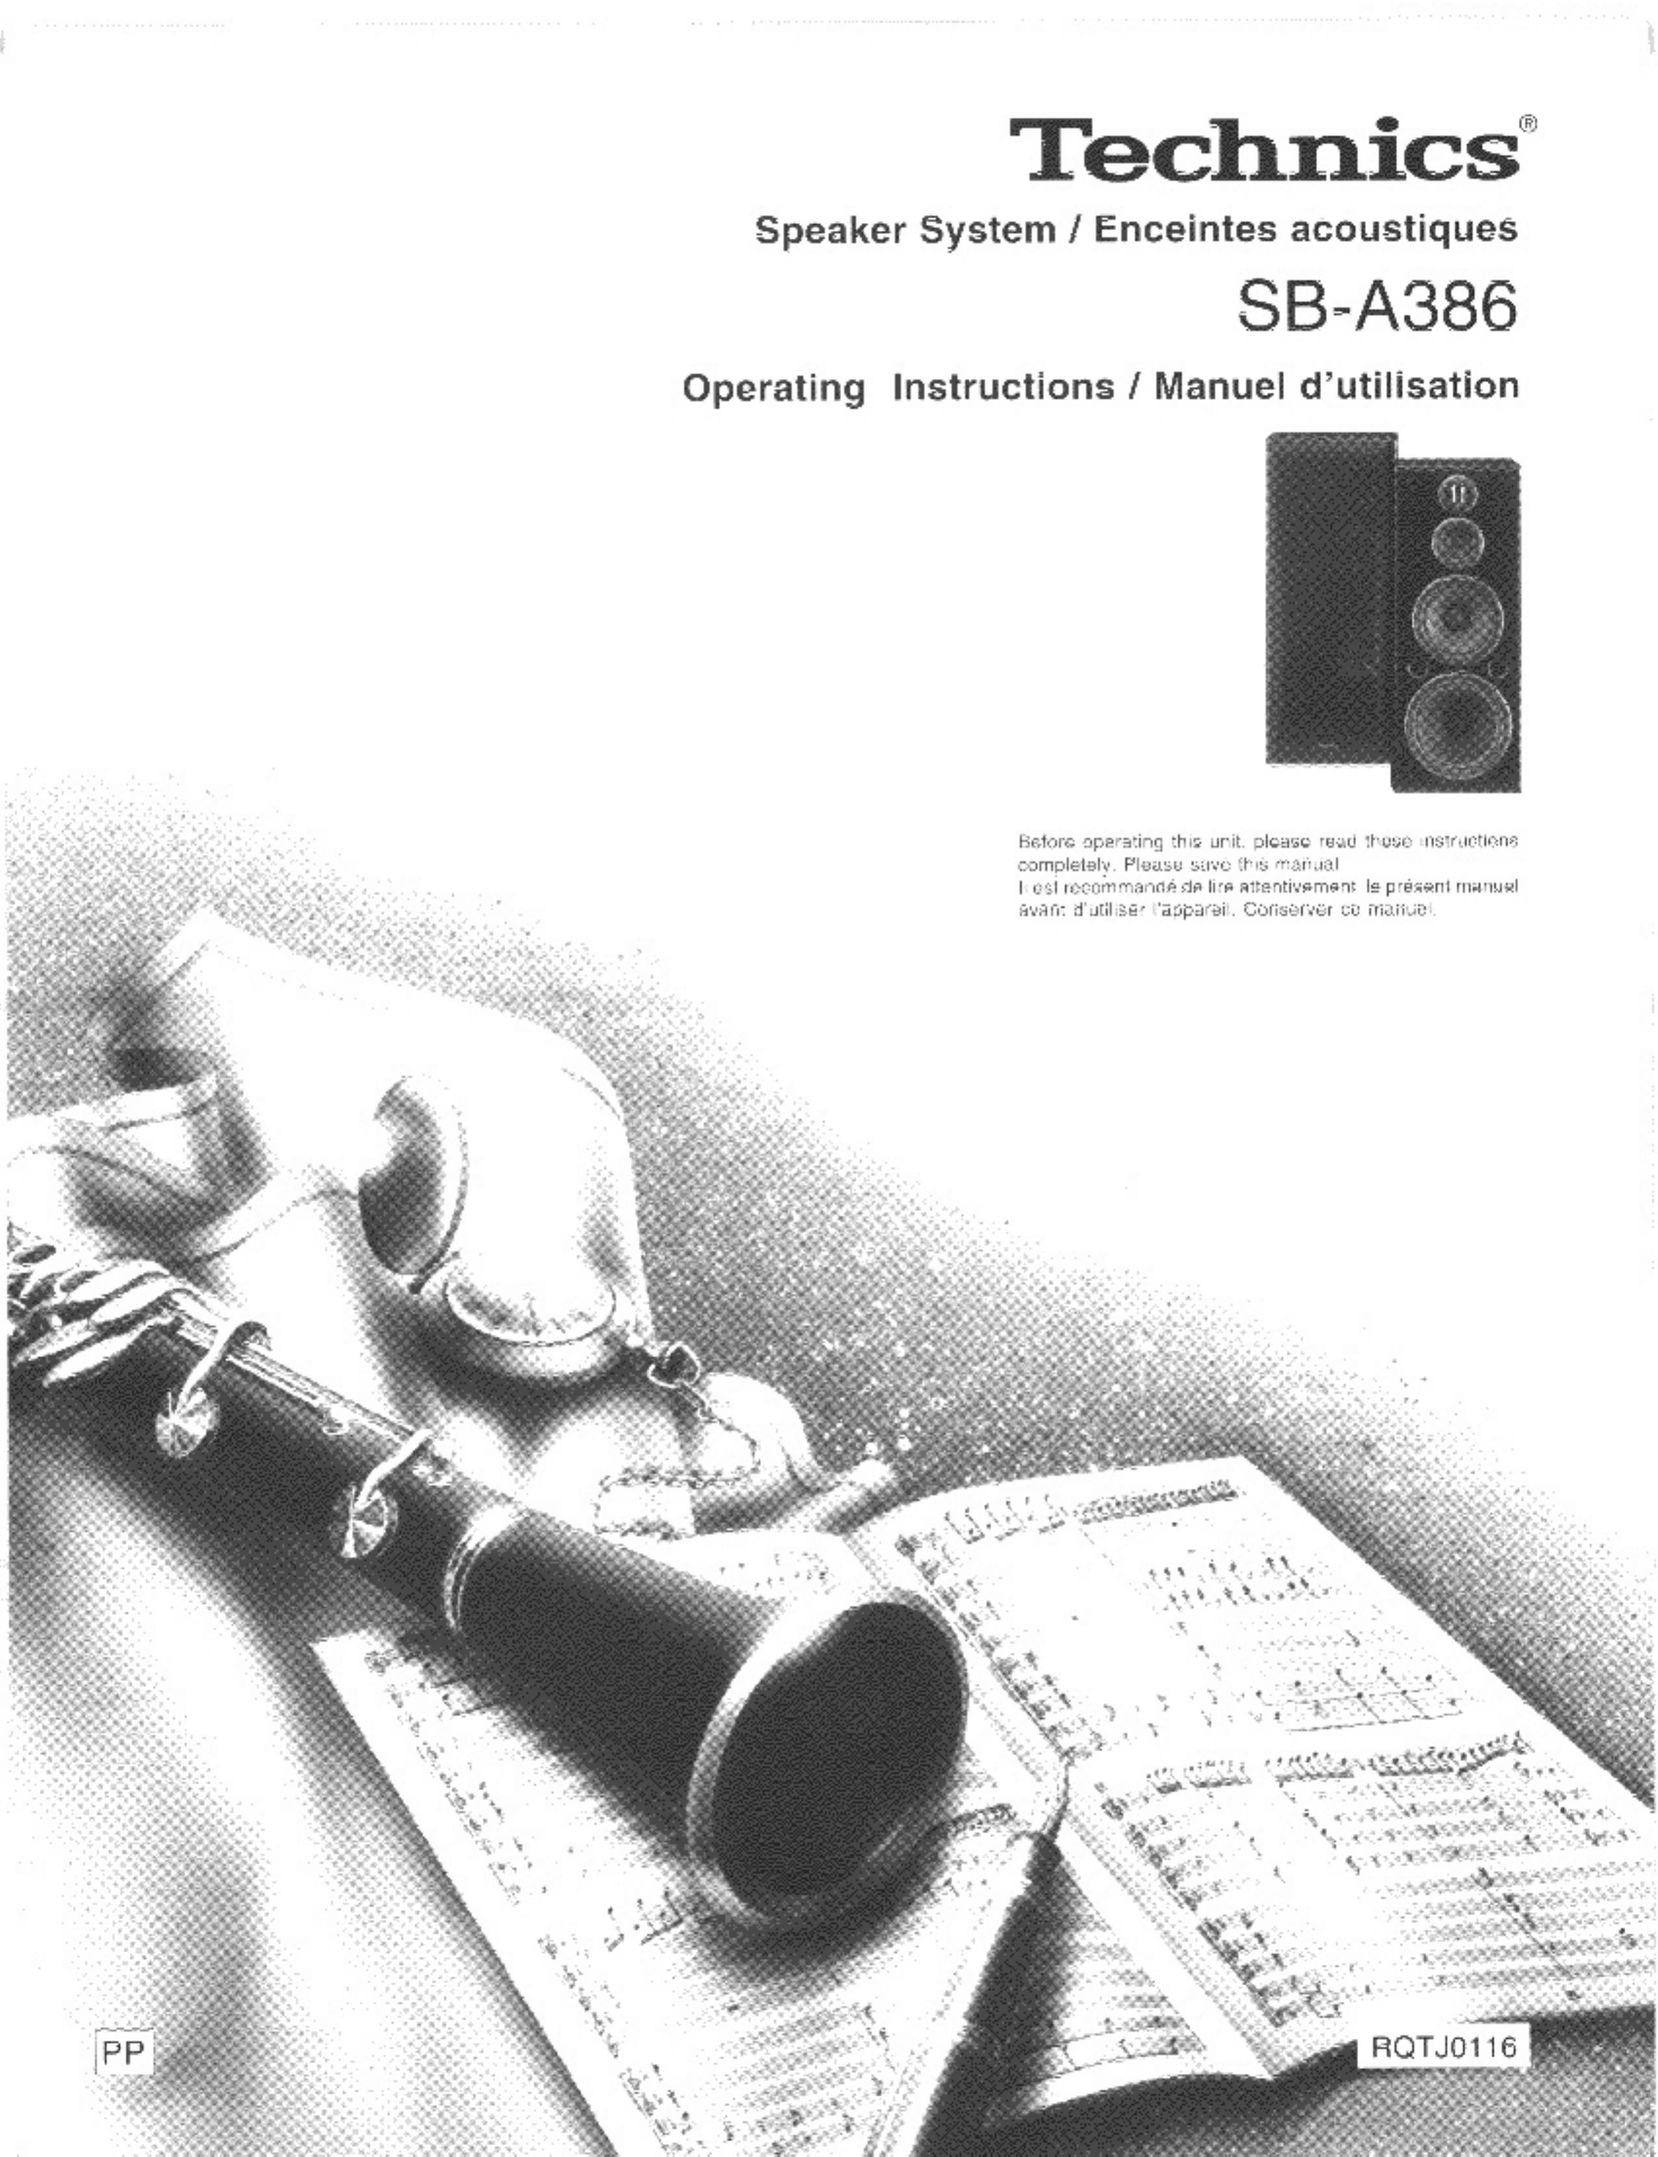 Technics SB-A386 Car Speaker User Manual